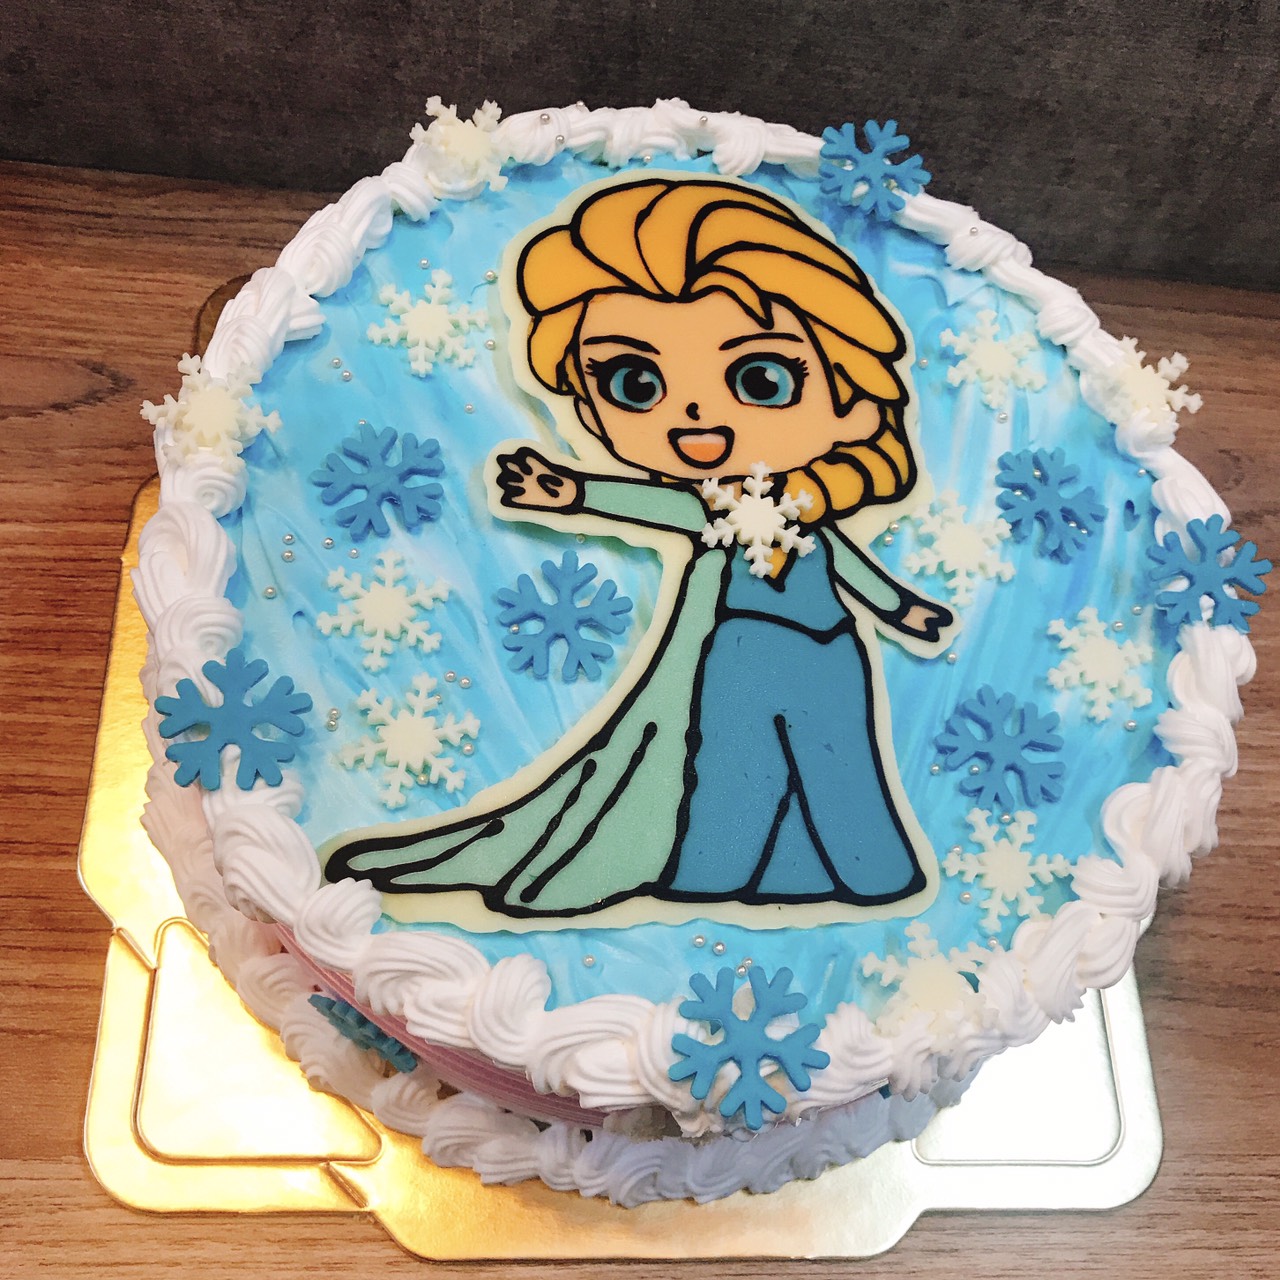 Connie's Home Sweets: 產品編號: A2871 Frozen Cake Elsa Cake 冰雪奇緣蛋糕 魔雪奇緣蛋糕